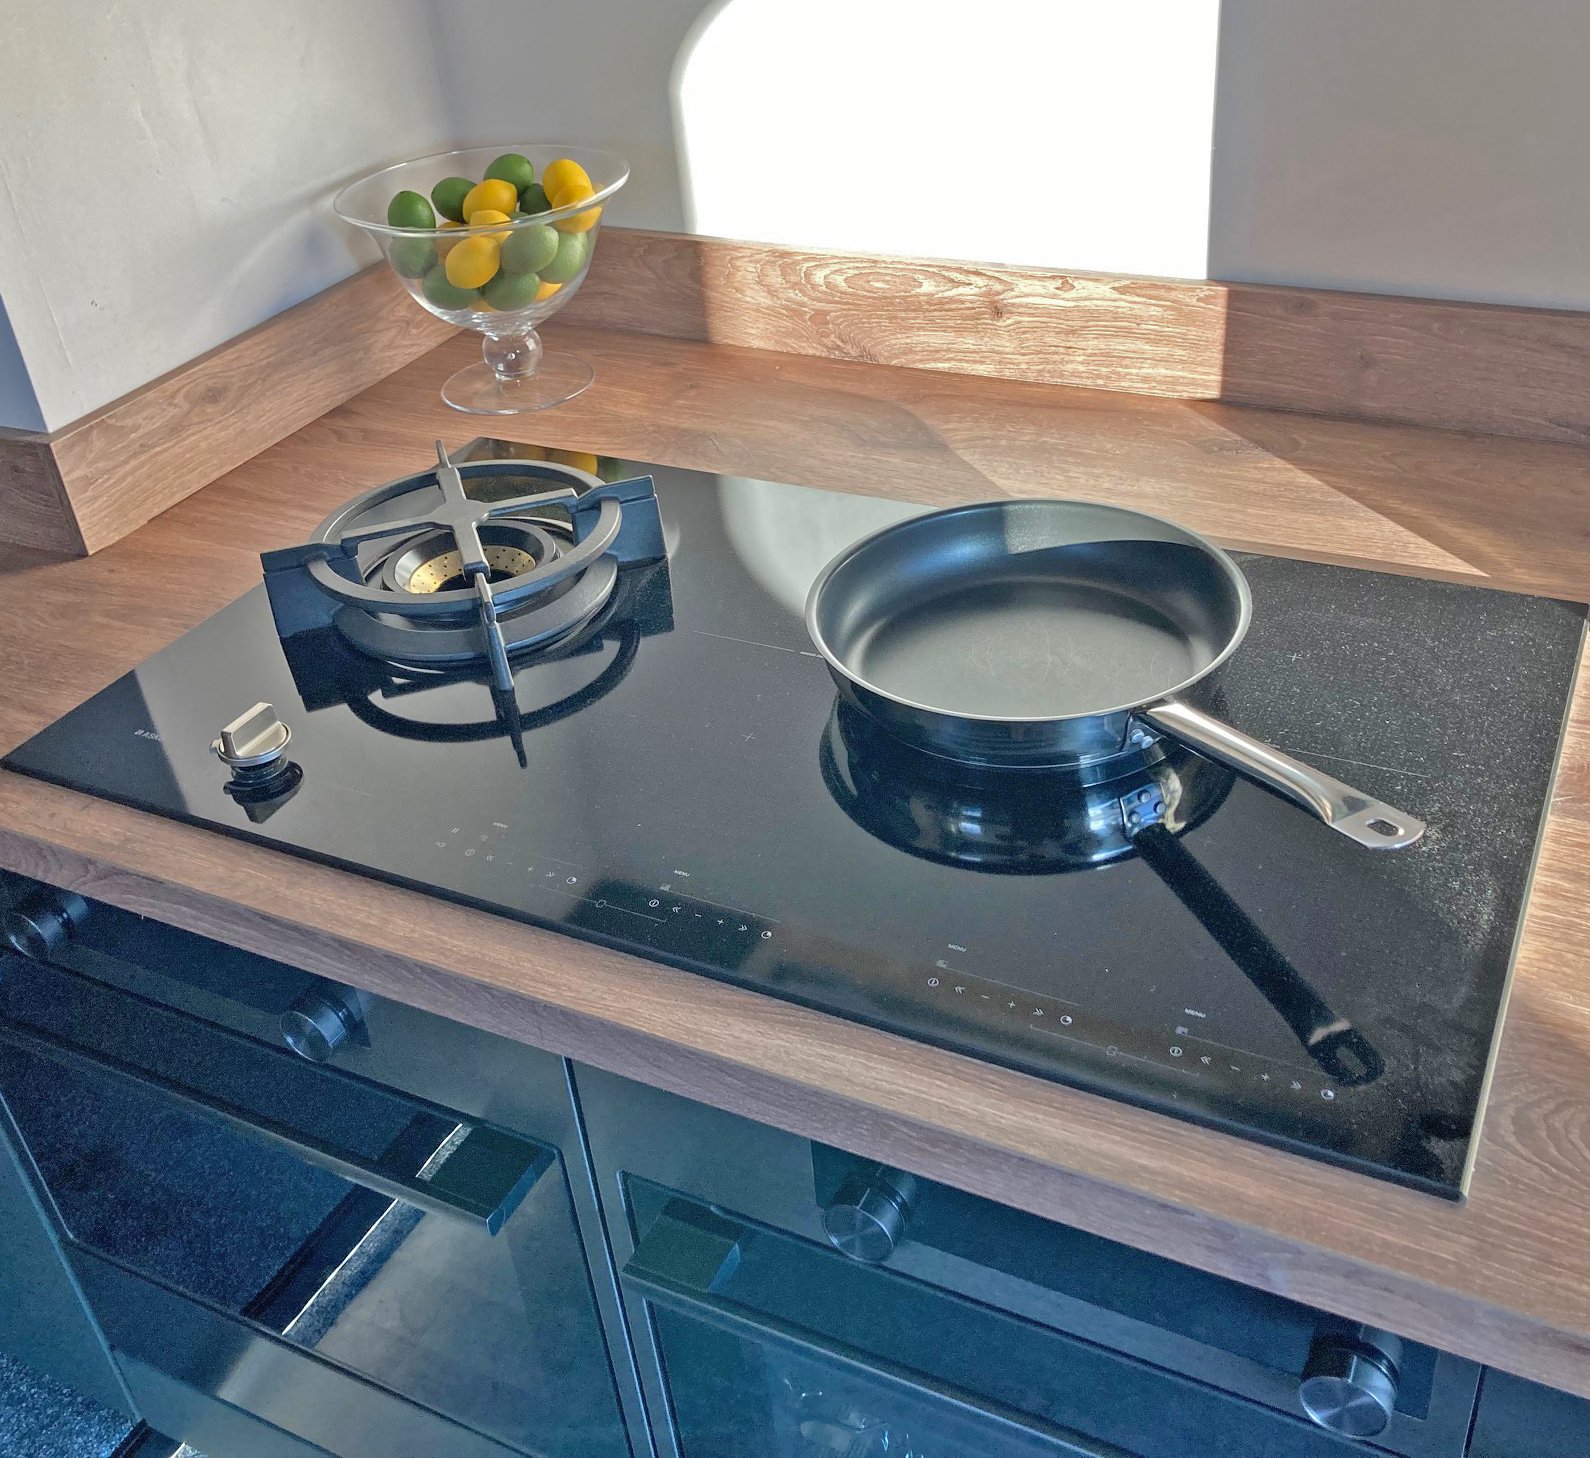 Codsall Kitchen Studio - New Display 3.jpg